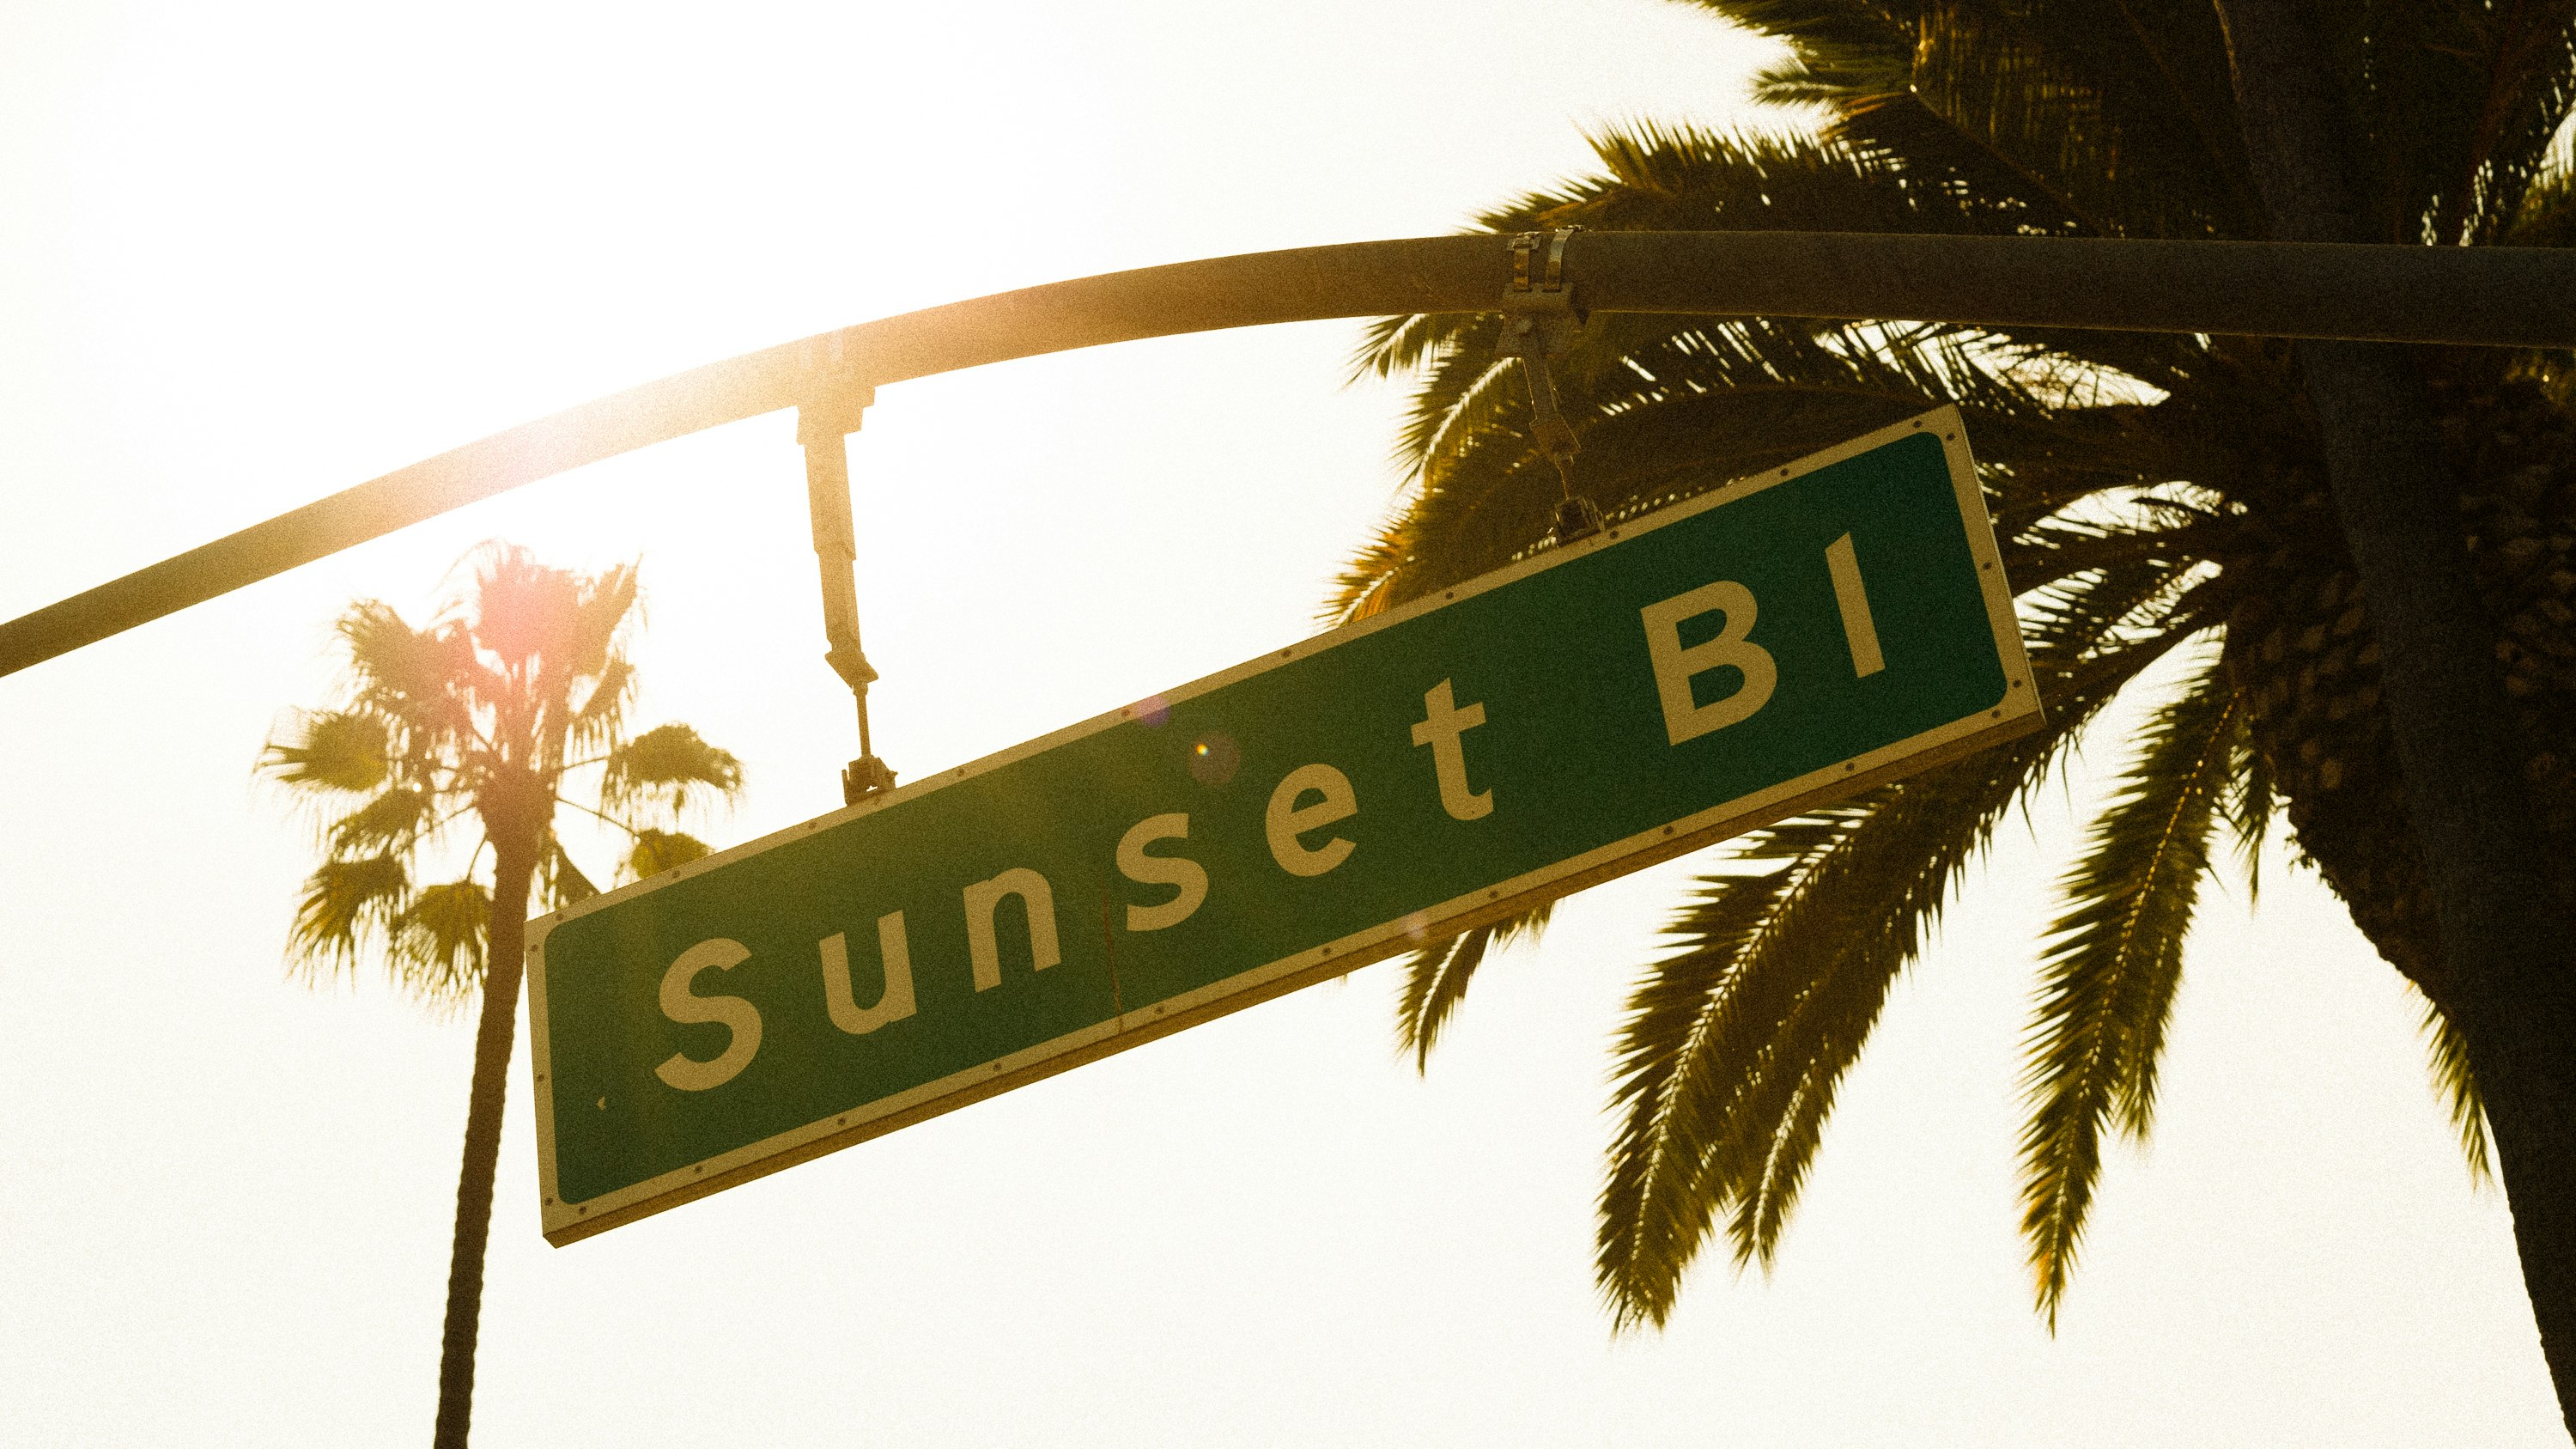 Sunset Bi signage